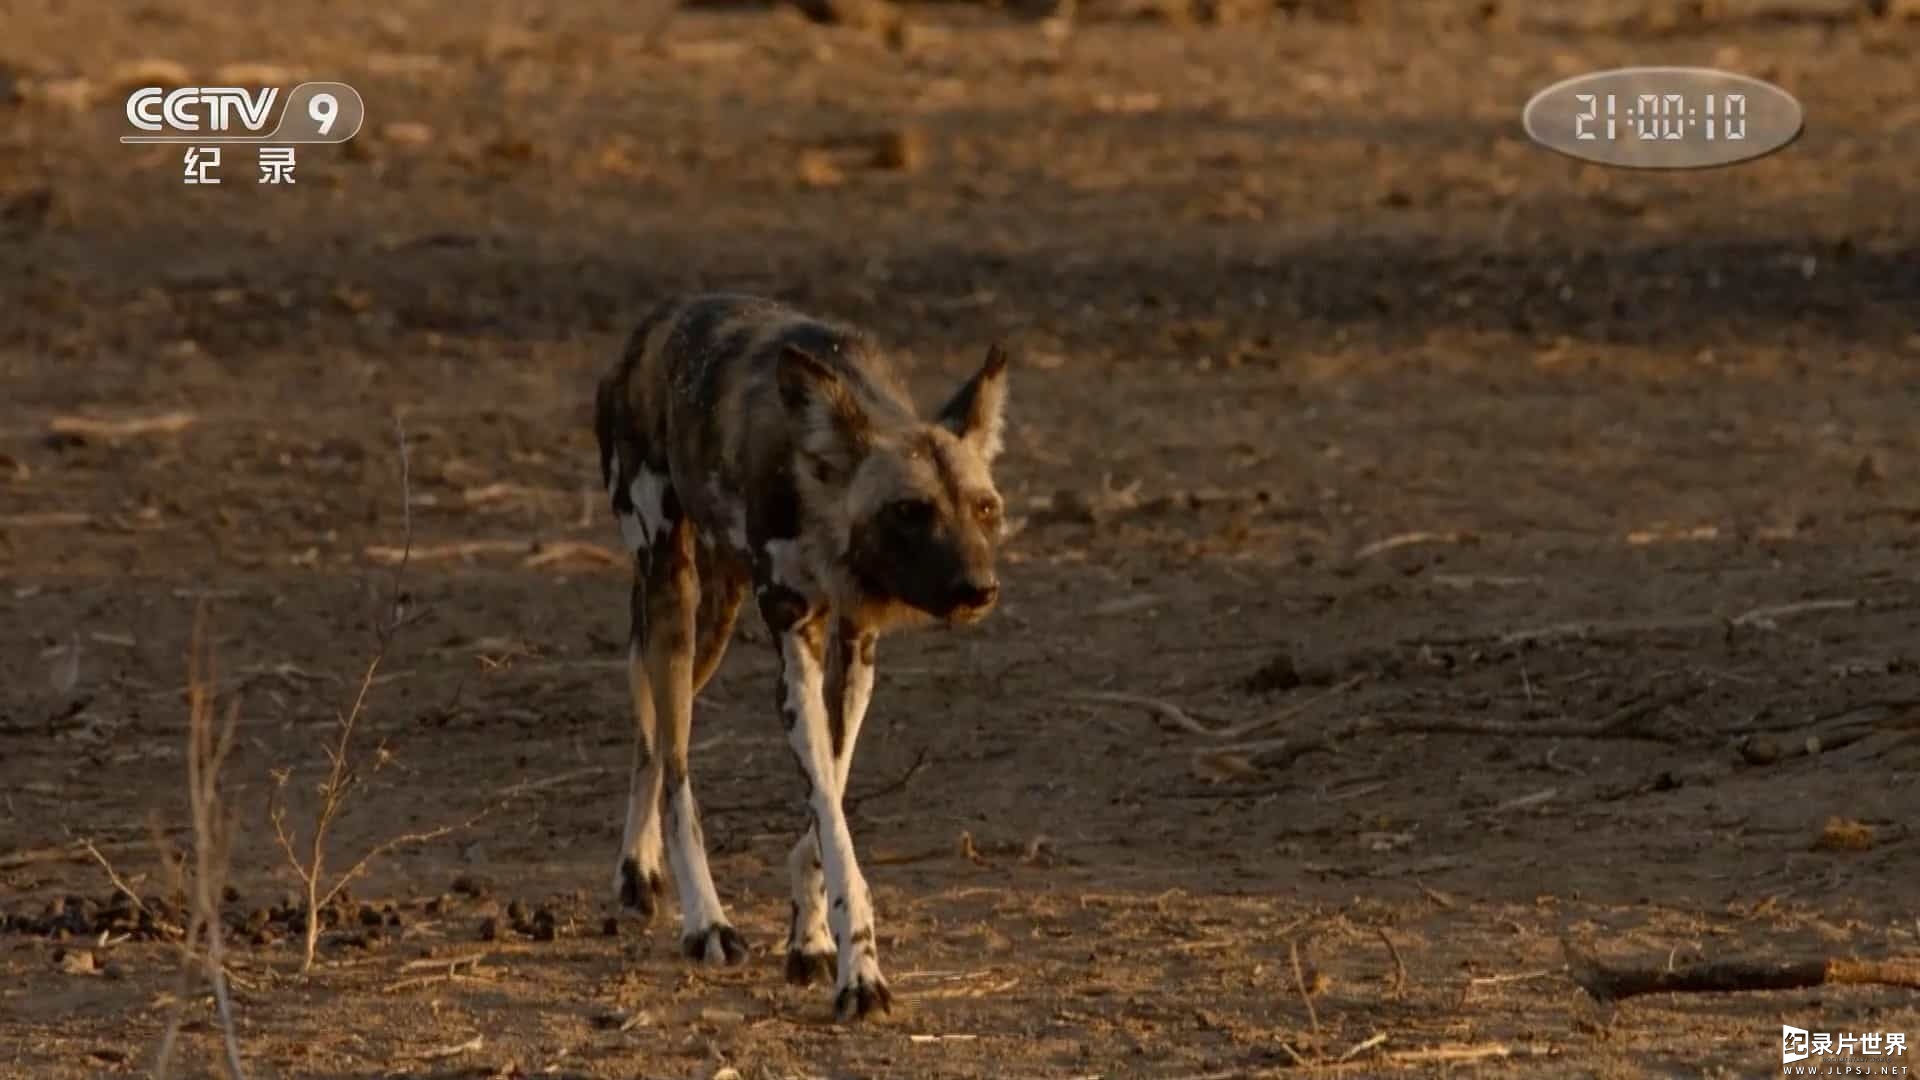 央视纪录片/动物保护《豺犬传奇/非洲野犬追踪实录A Wild Dog's Tale :The Story of a Lonely African Wild Dog/ Wild Dogs Chasing Tales 2019》全4集